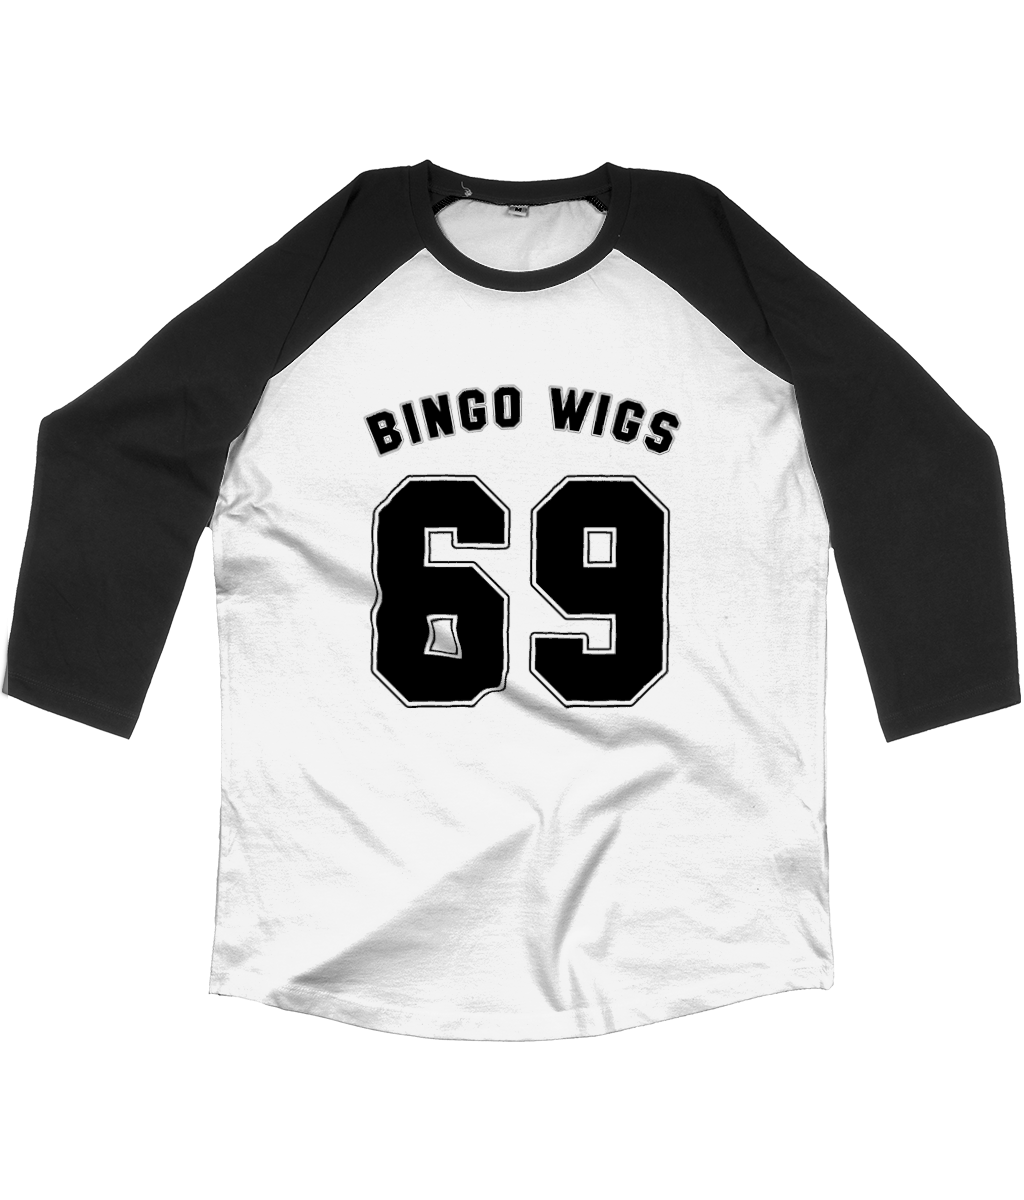 Bingo Wigs 69 Baseball Long Sleeve - SNATCHED MERCH